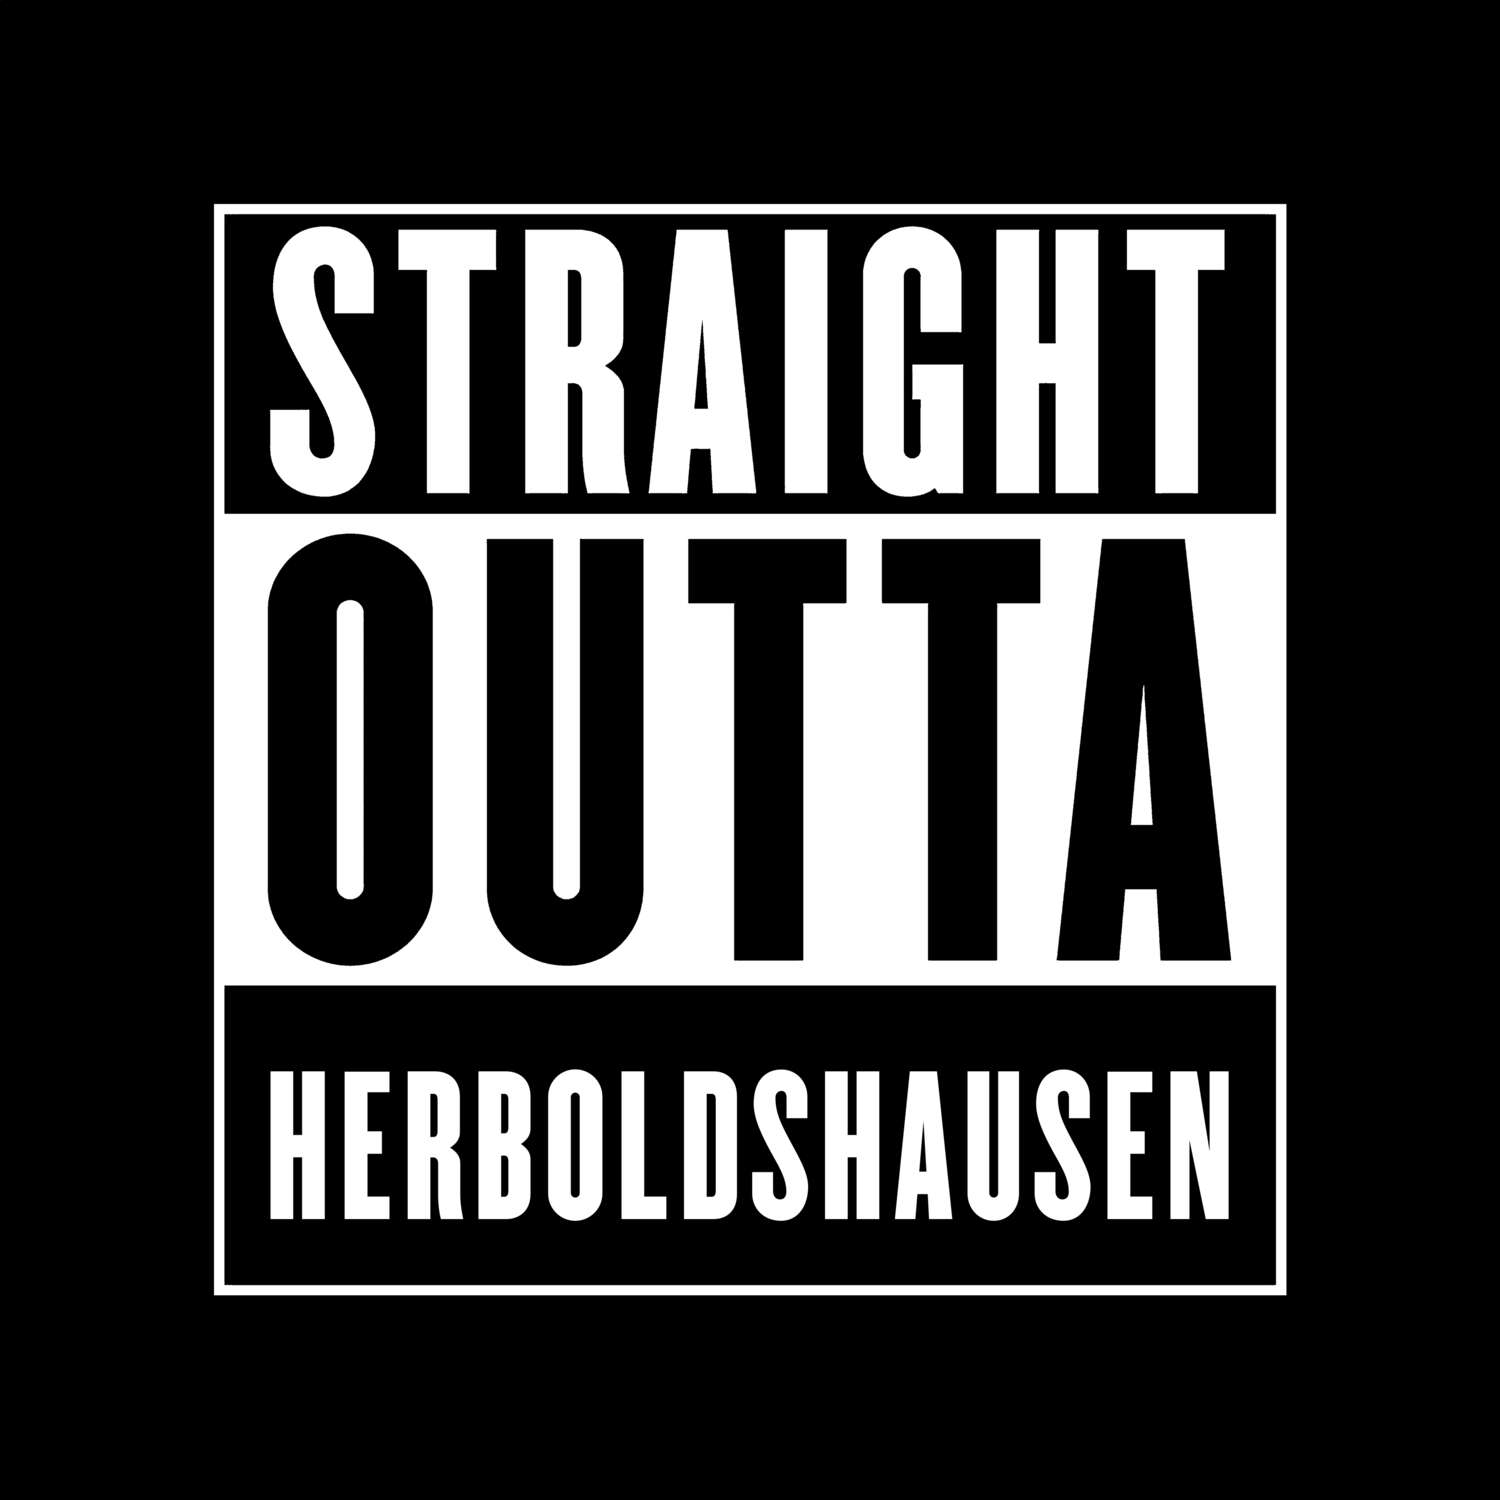 Herboldshausen T-Shirt »Straight Outta«